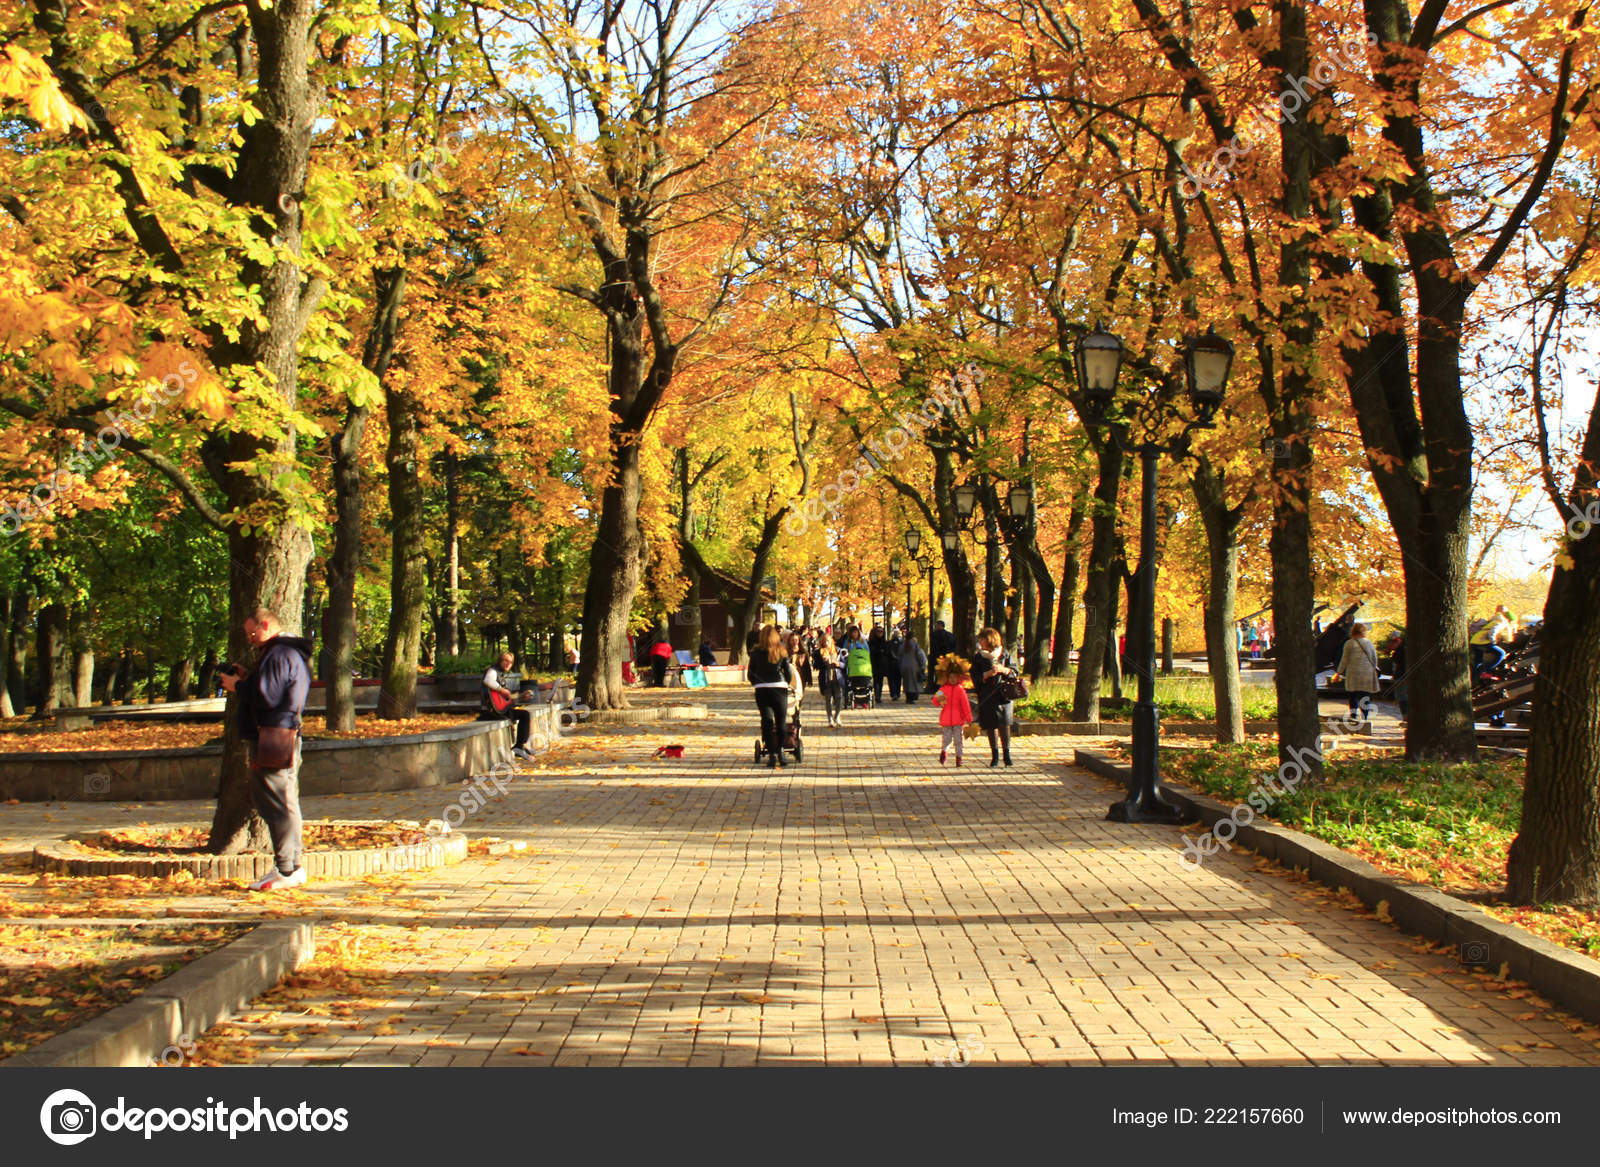 Chernihiv Ukraine October 2017 Central City Park People Walking